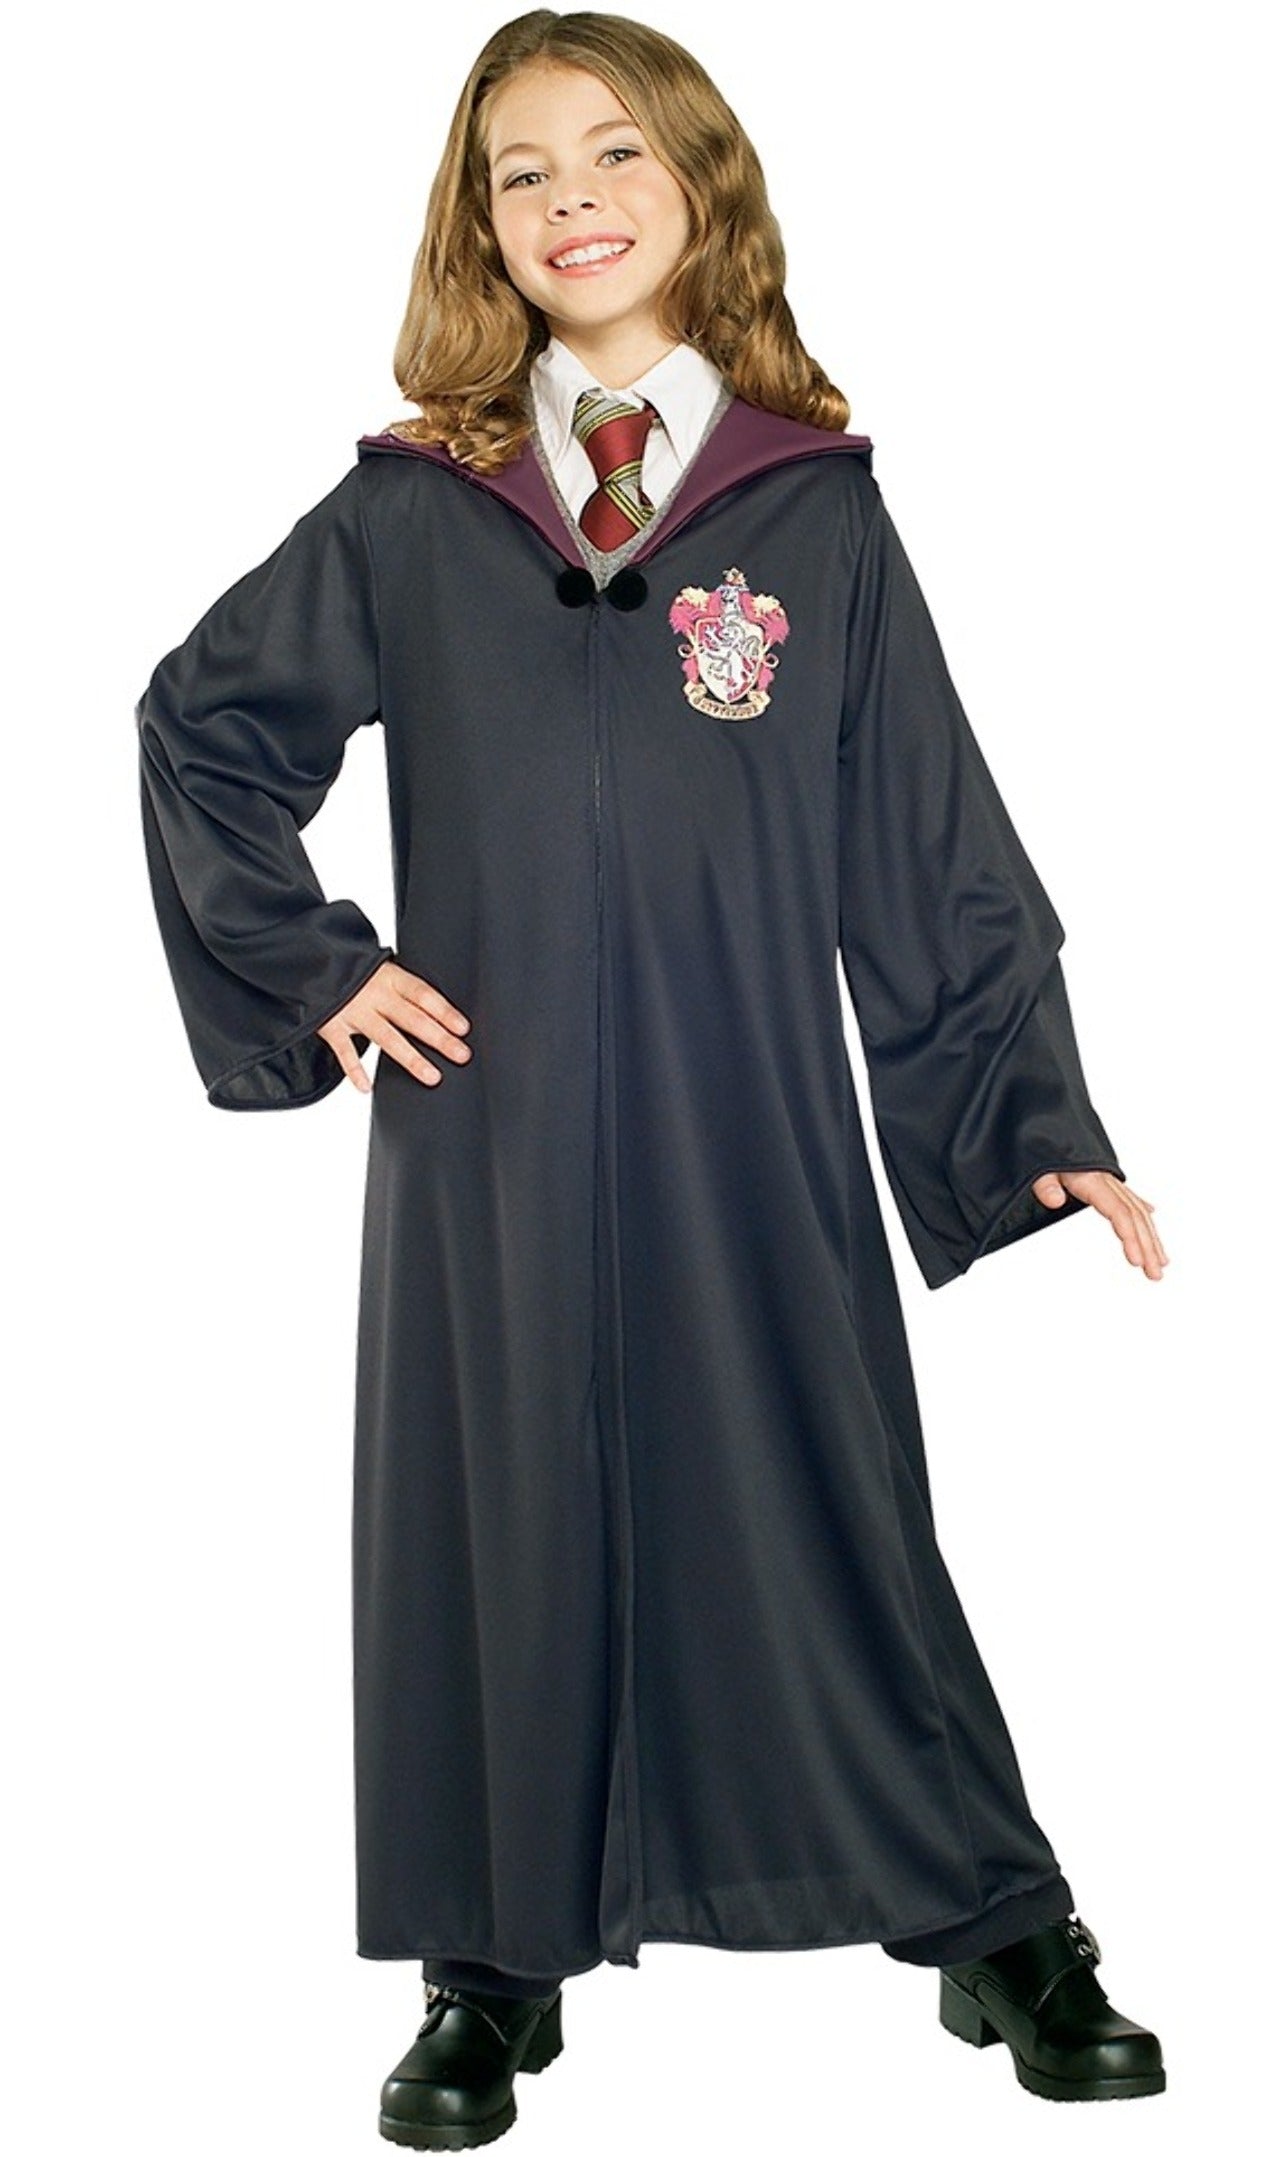 Costume da Hermione da Harry Potter™ per bambina